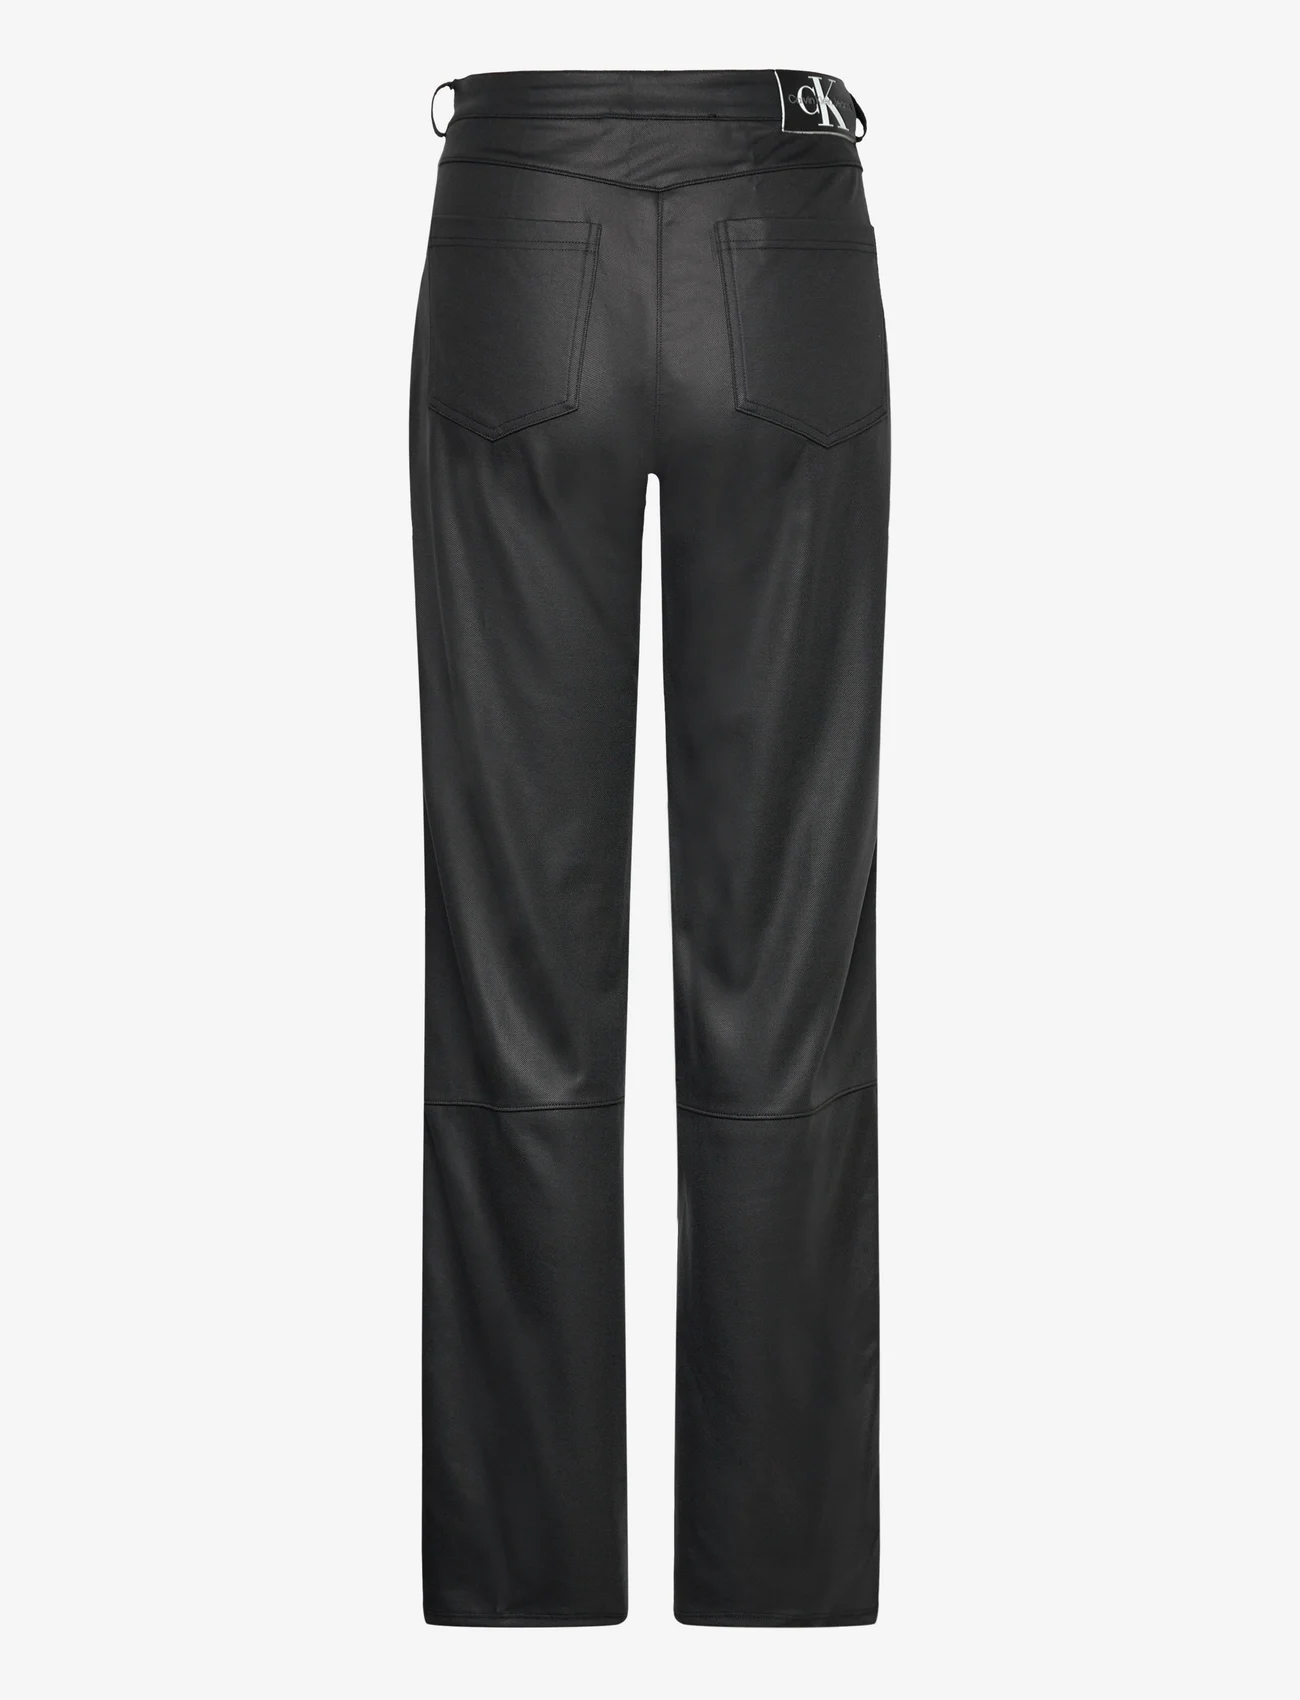 Calvin Klein Jeans - COATED MILANO HR STRAIGHT - festmode zu outlet-preisen - ck black - 1